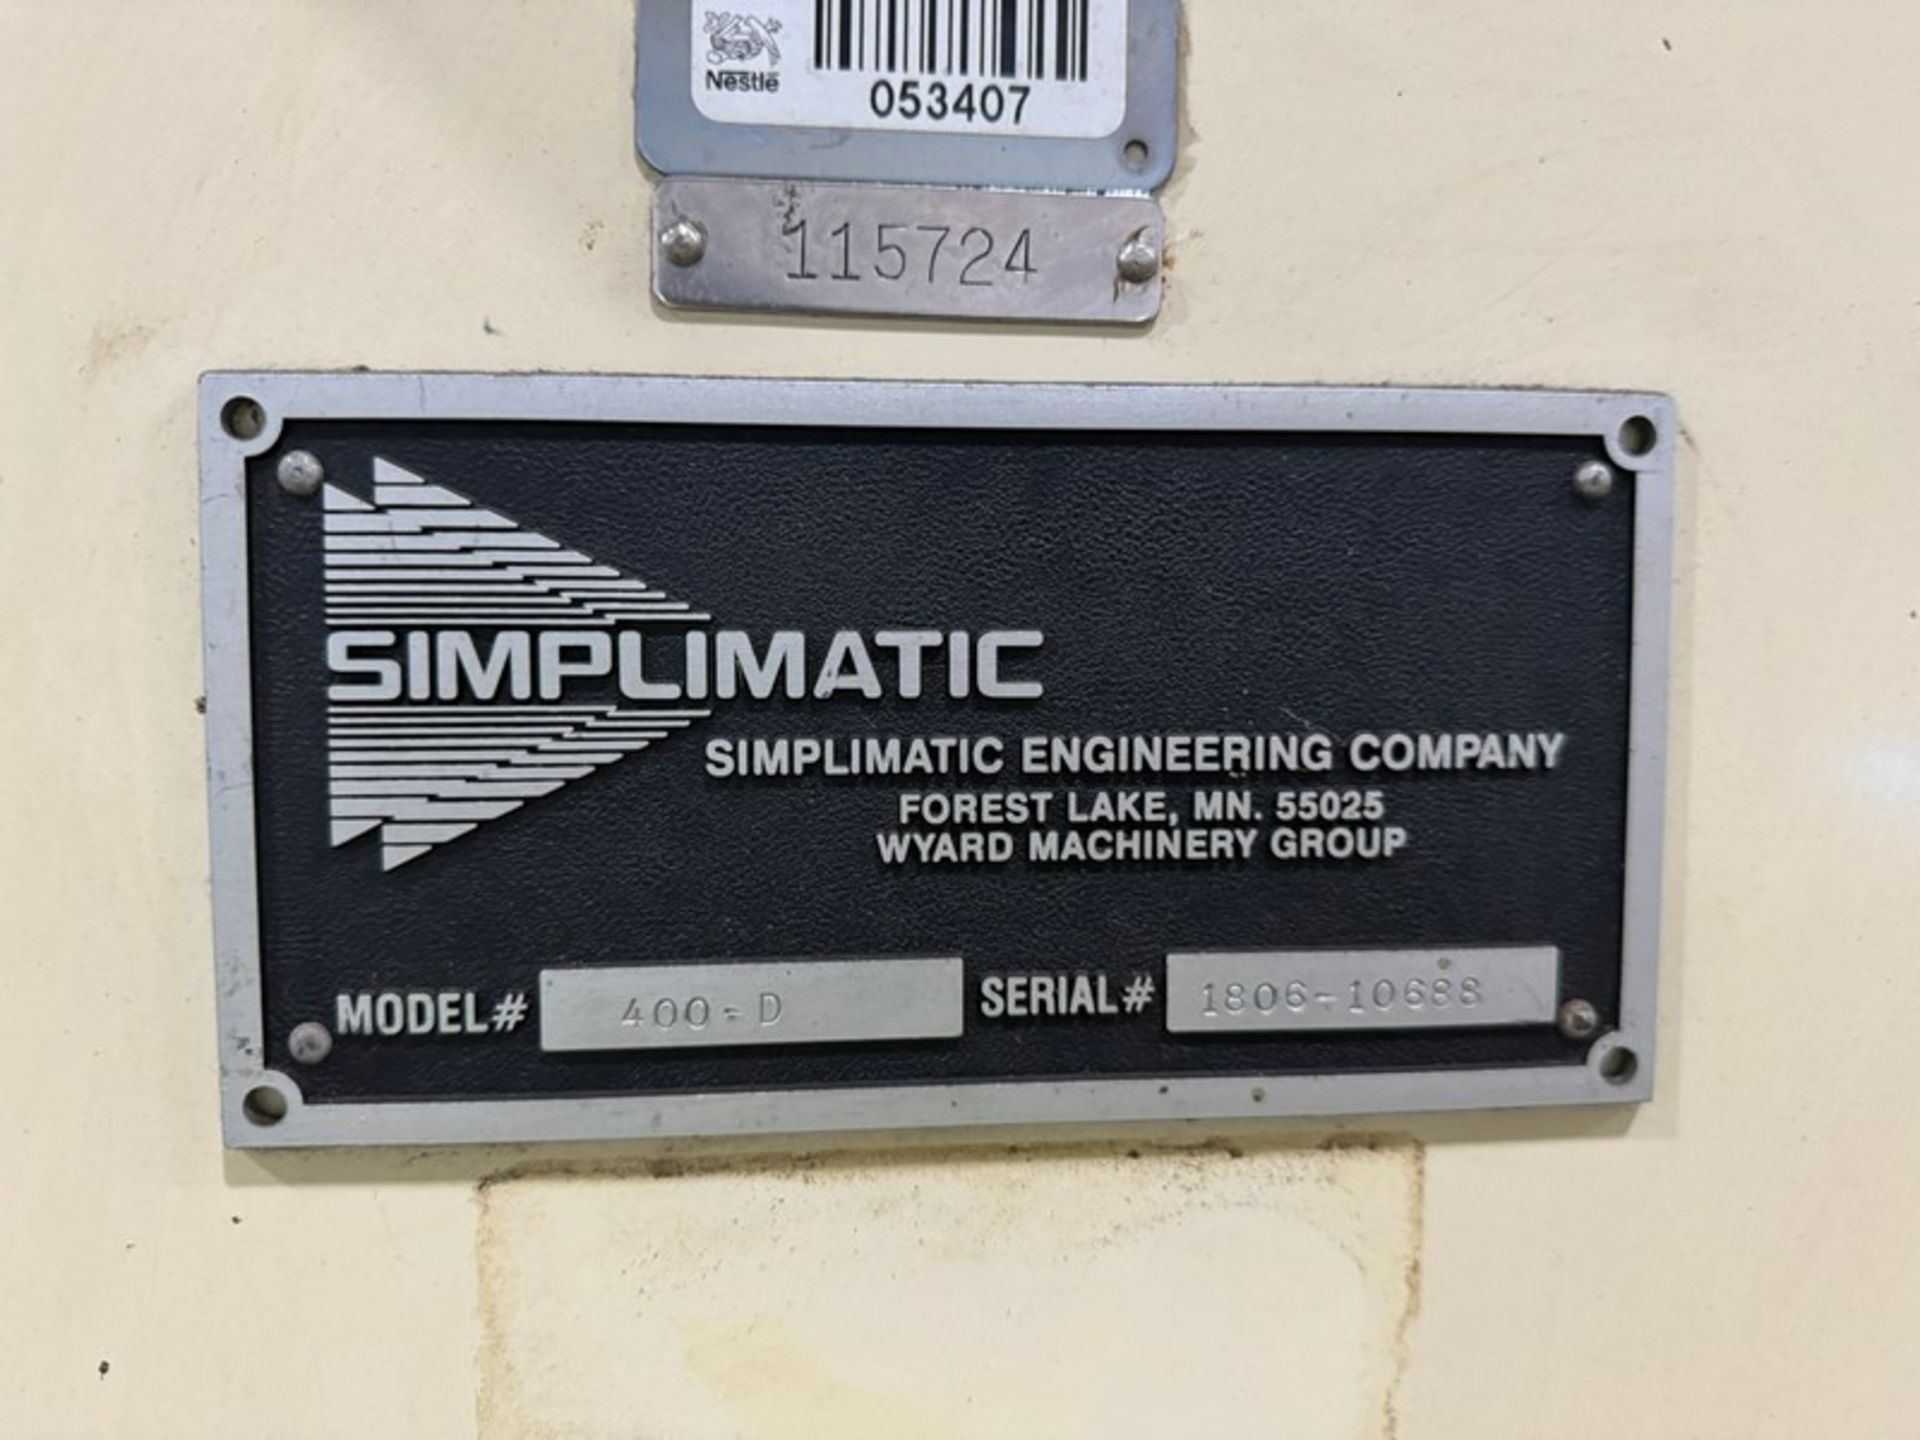 Simplimatic Engineering Company Depalletizer, M/N 400-D, S/N 1806-10688, with 2-Door Control Panel - Image 8 of 15